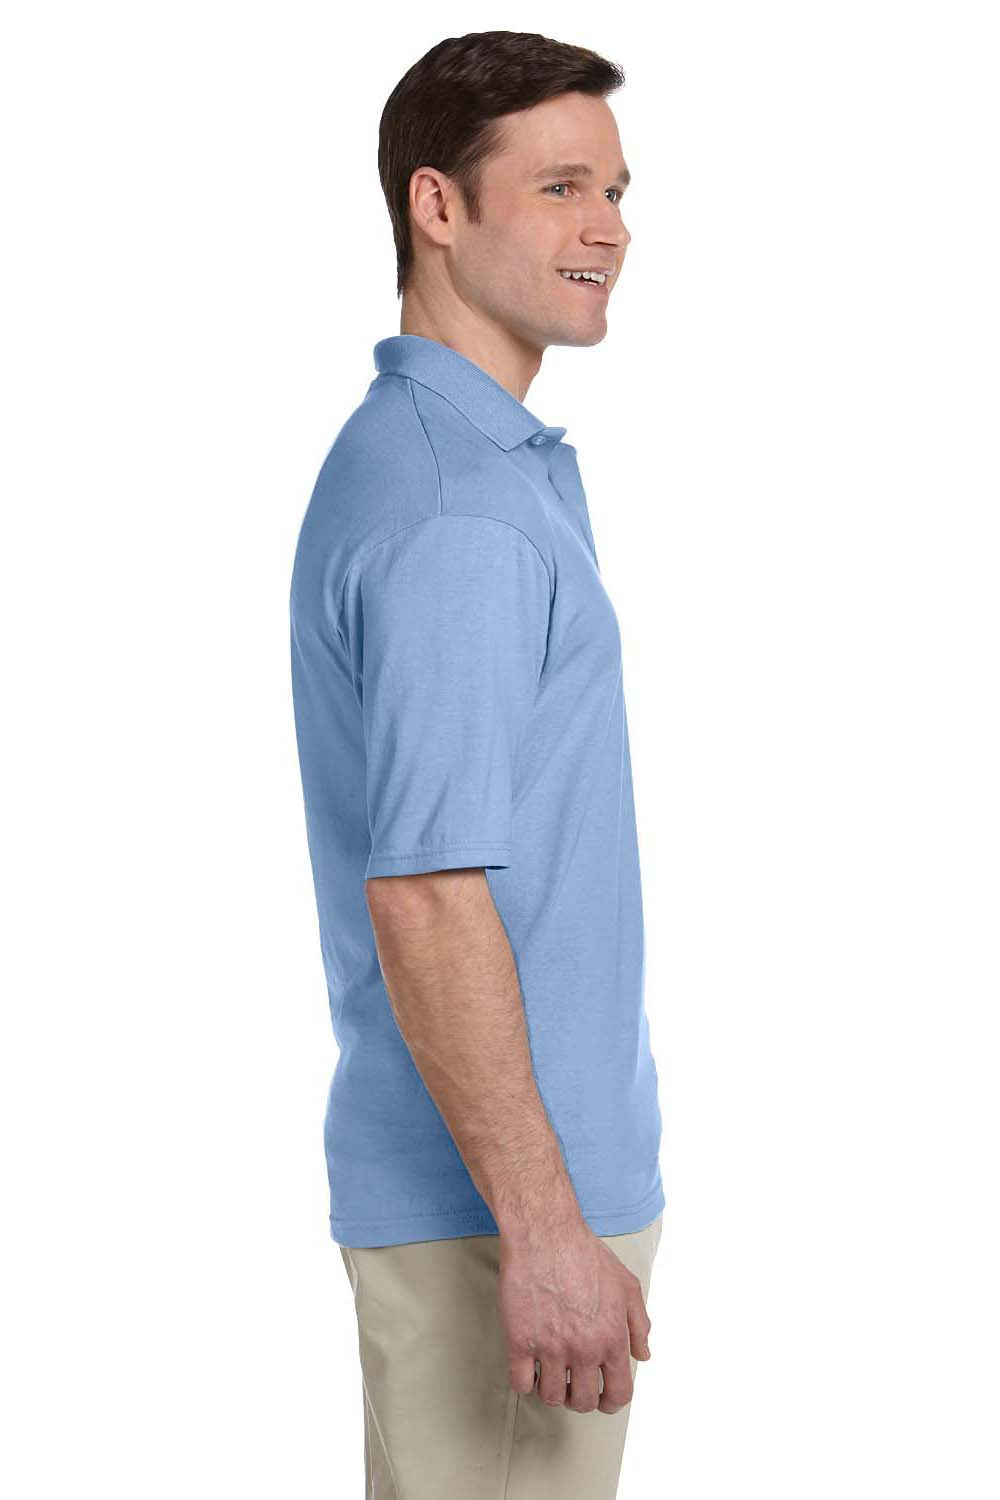 Jerzees 436P Mens SpotShield Stain Resistant Short Sleeve Polo Shirt w/ Pocket Light Blue Side